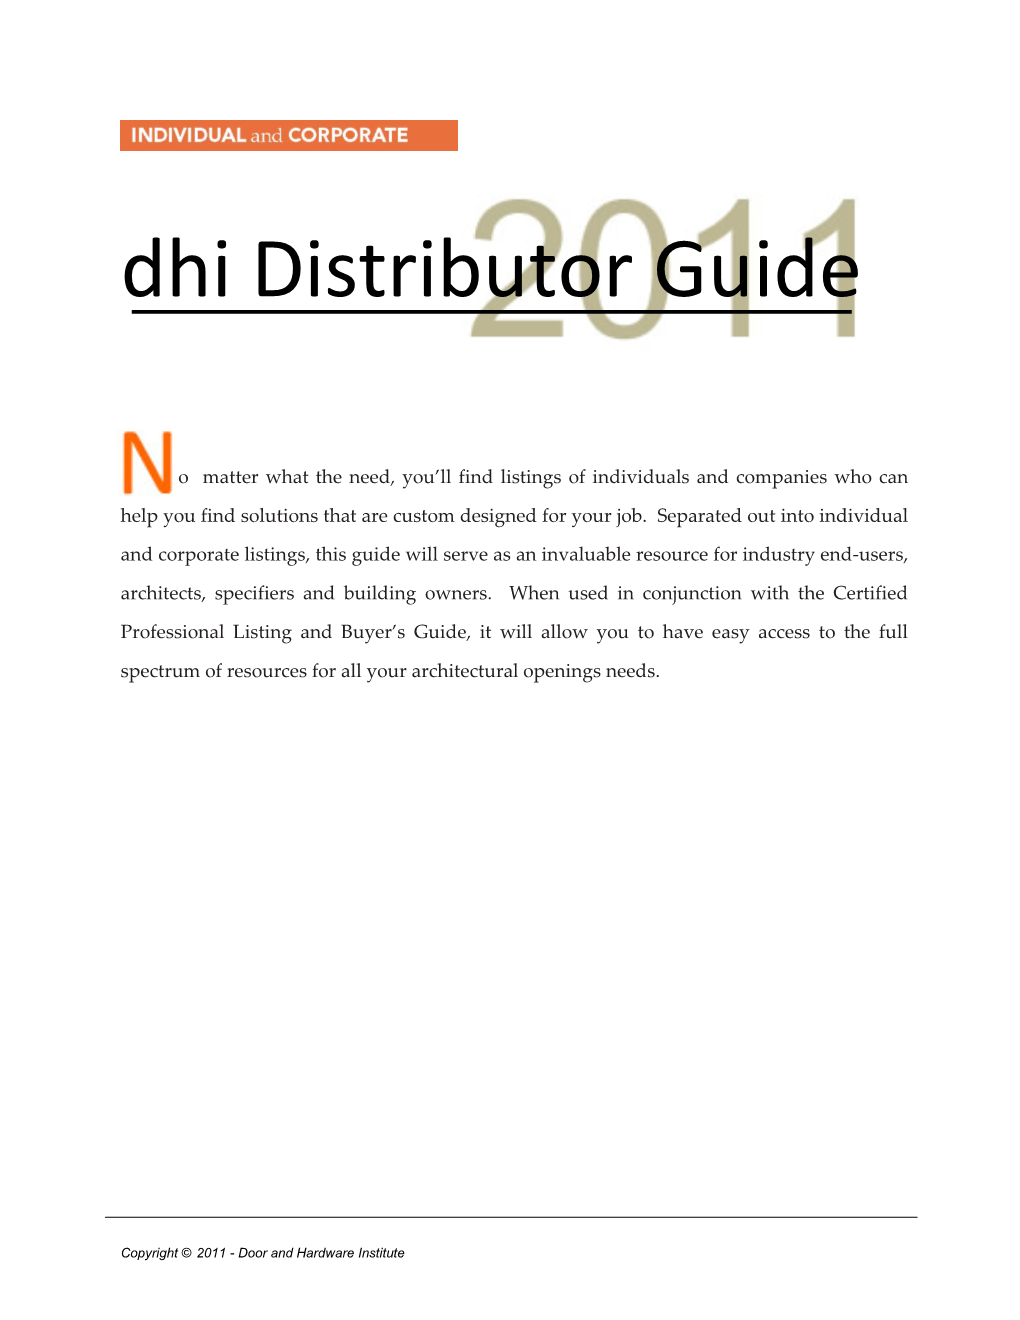 Dhi Distributor Guide